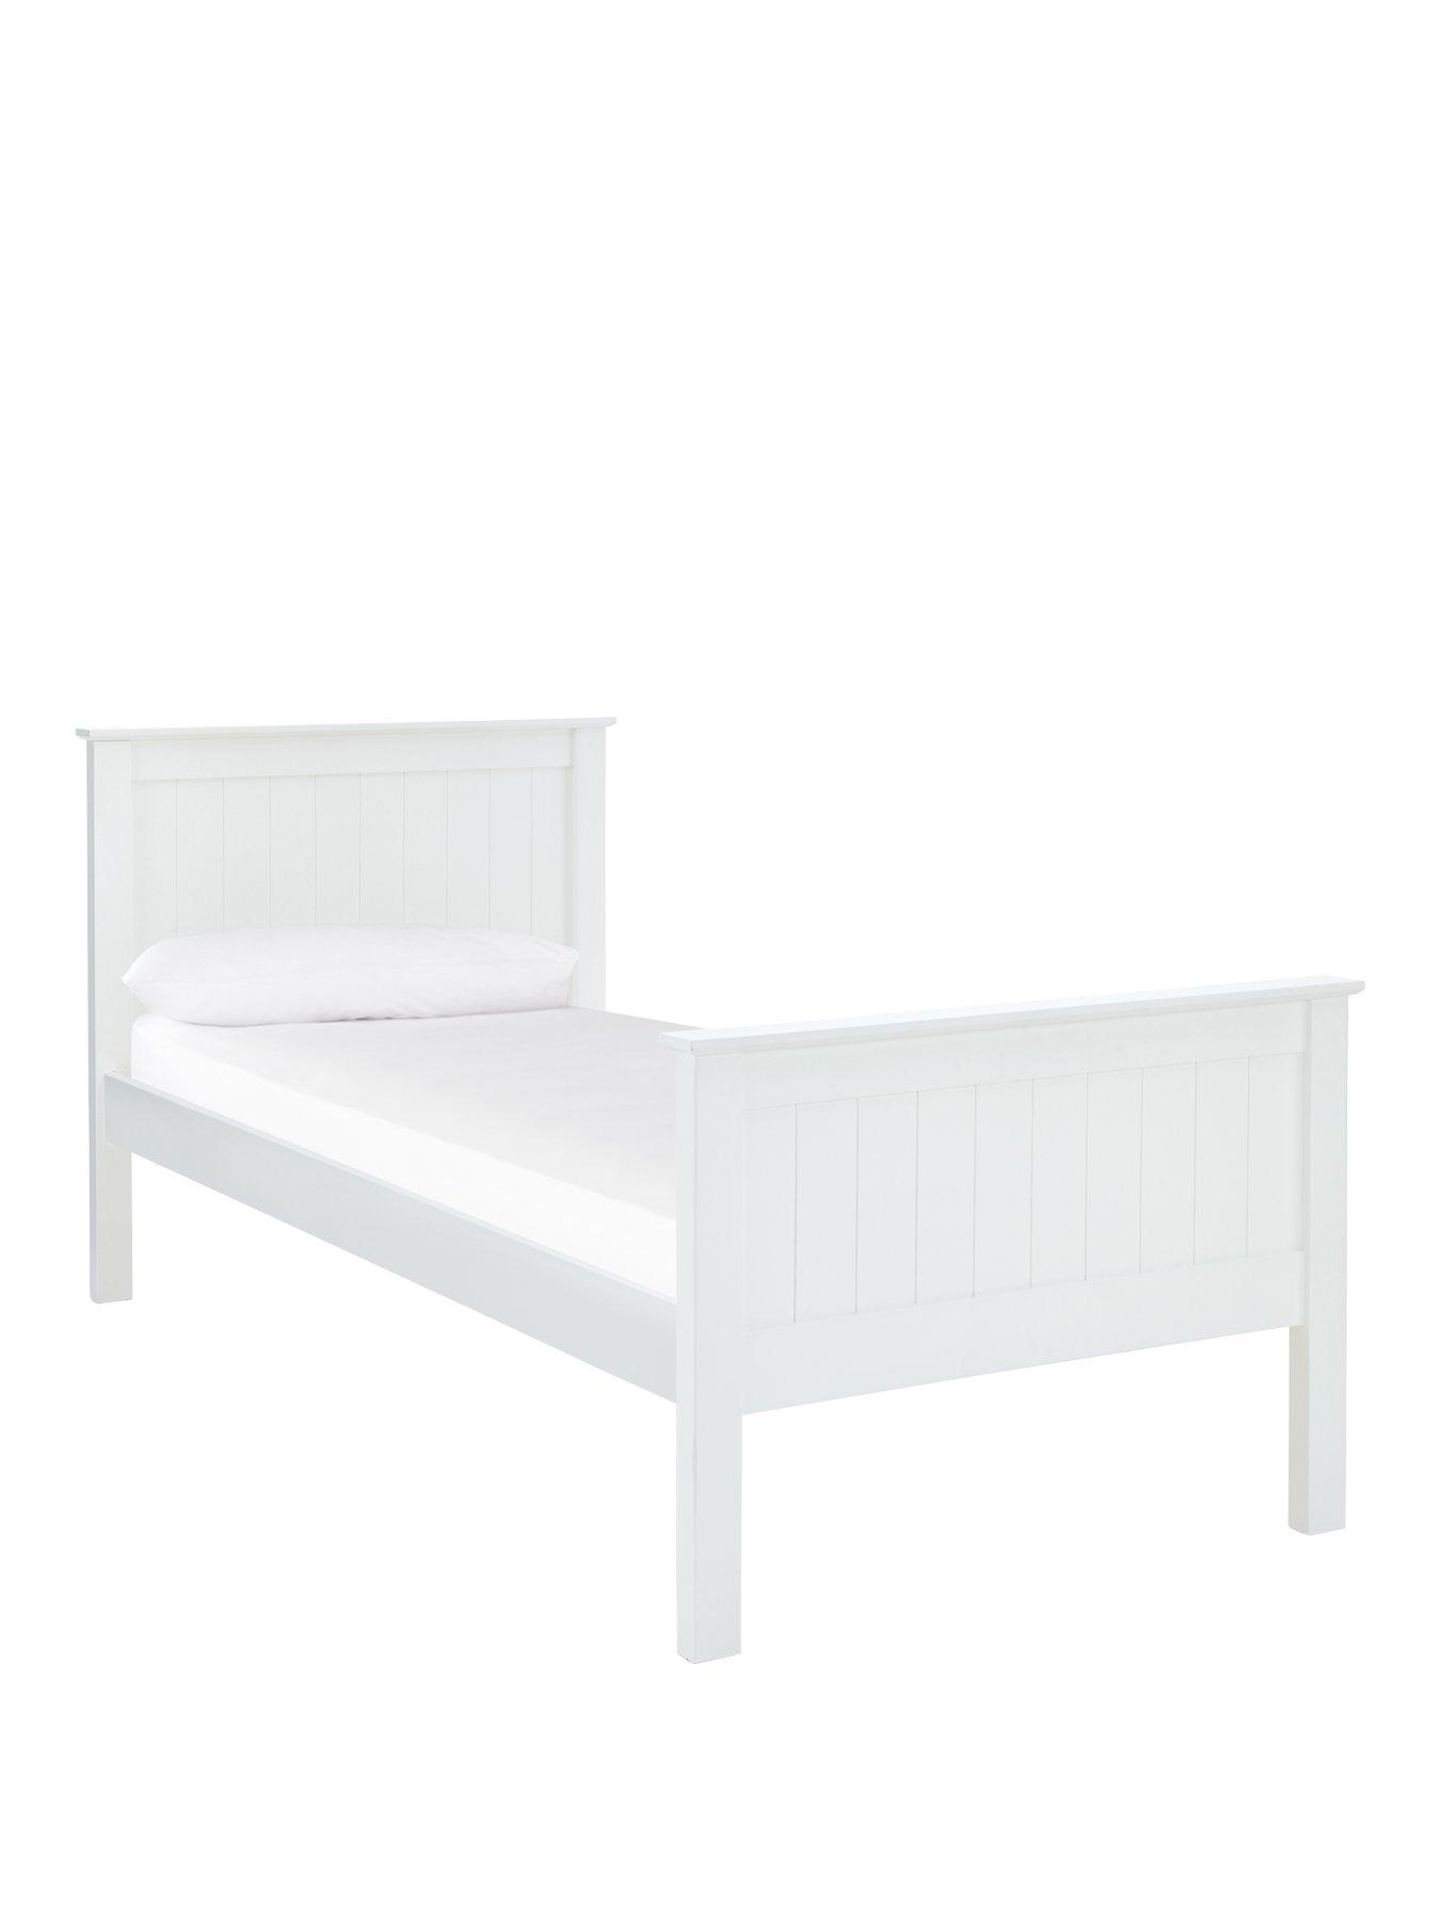 boxed item silent night jupiter single bed [white] 98x103x201cm rrp: £476.0